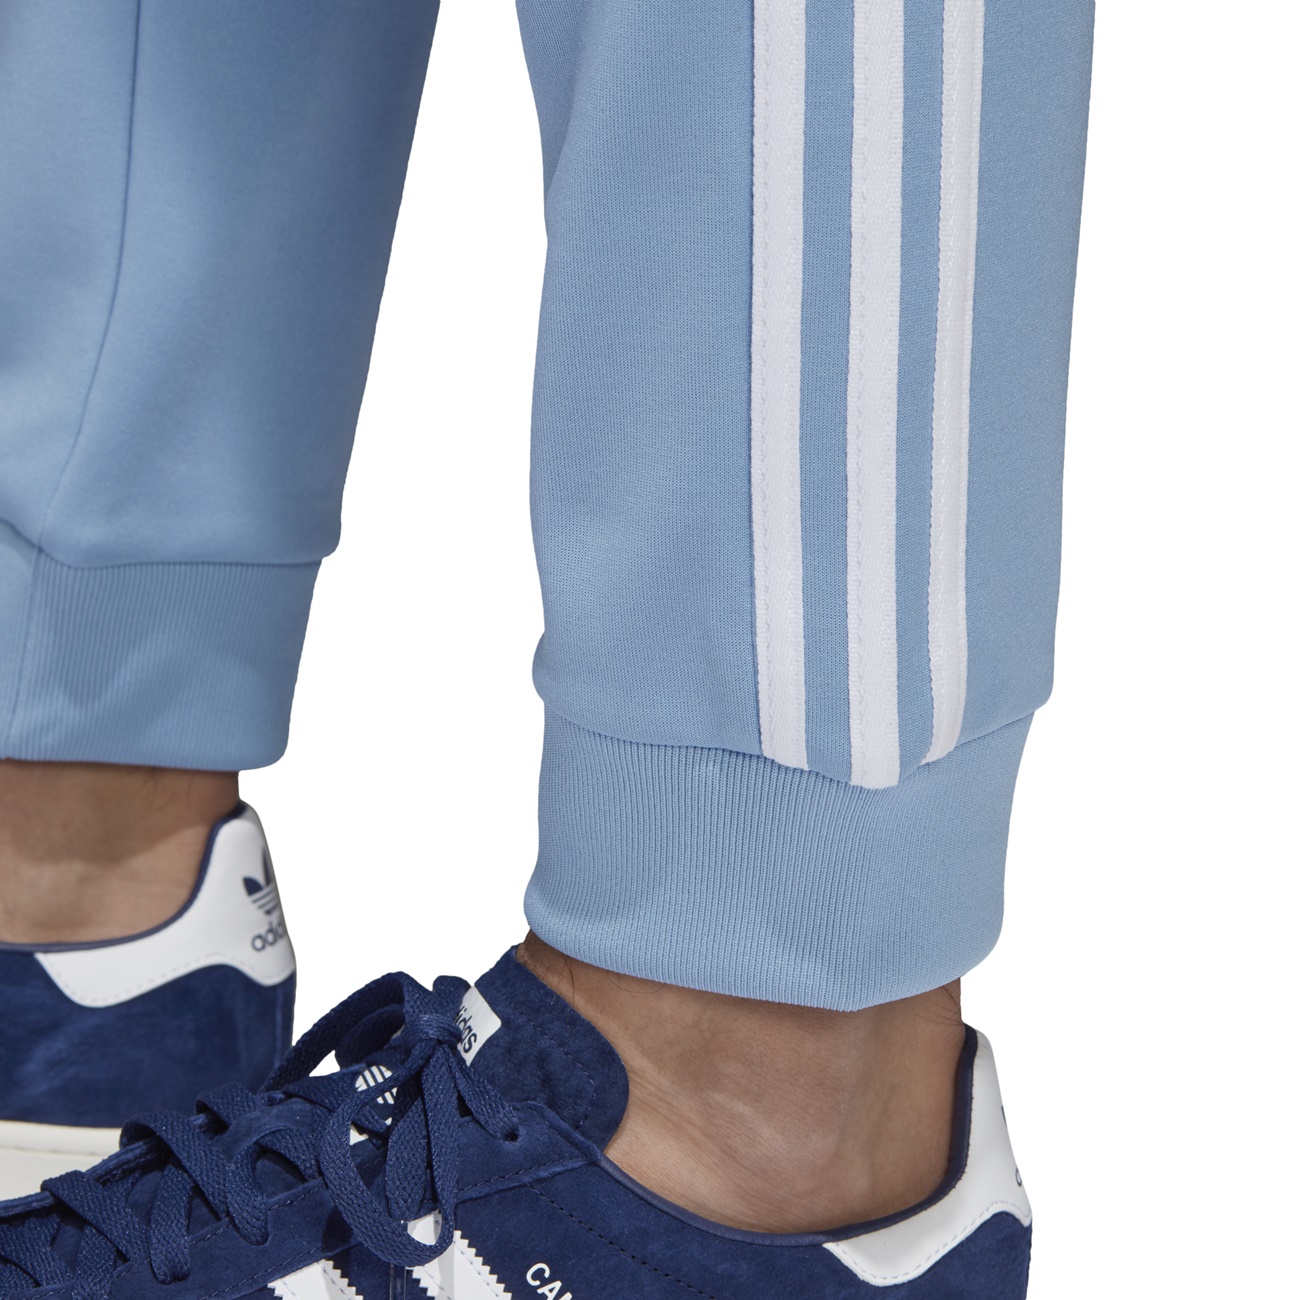 adidas sst track pants ash blue